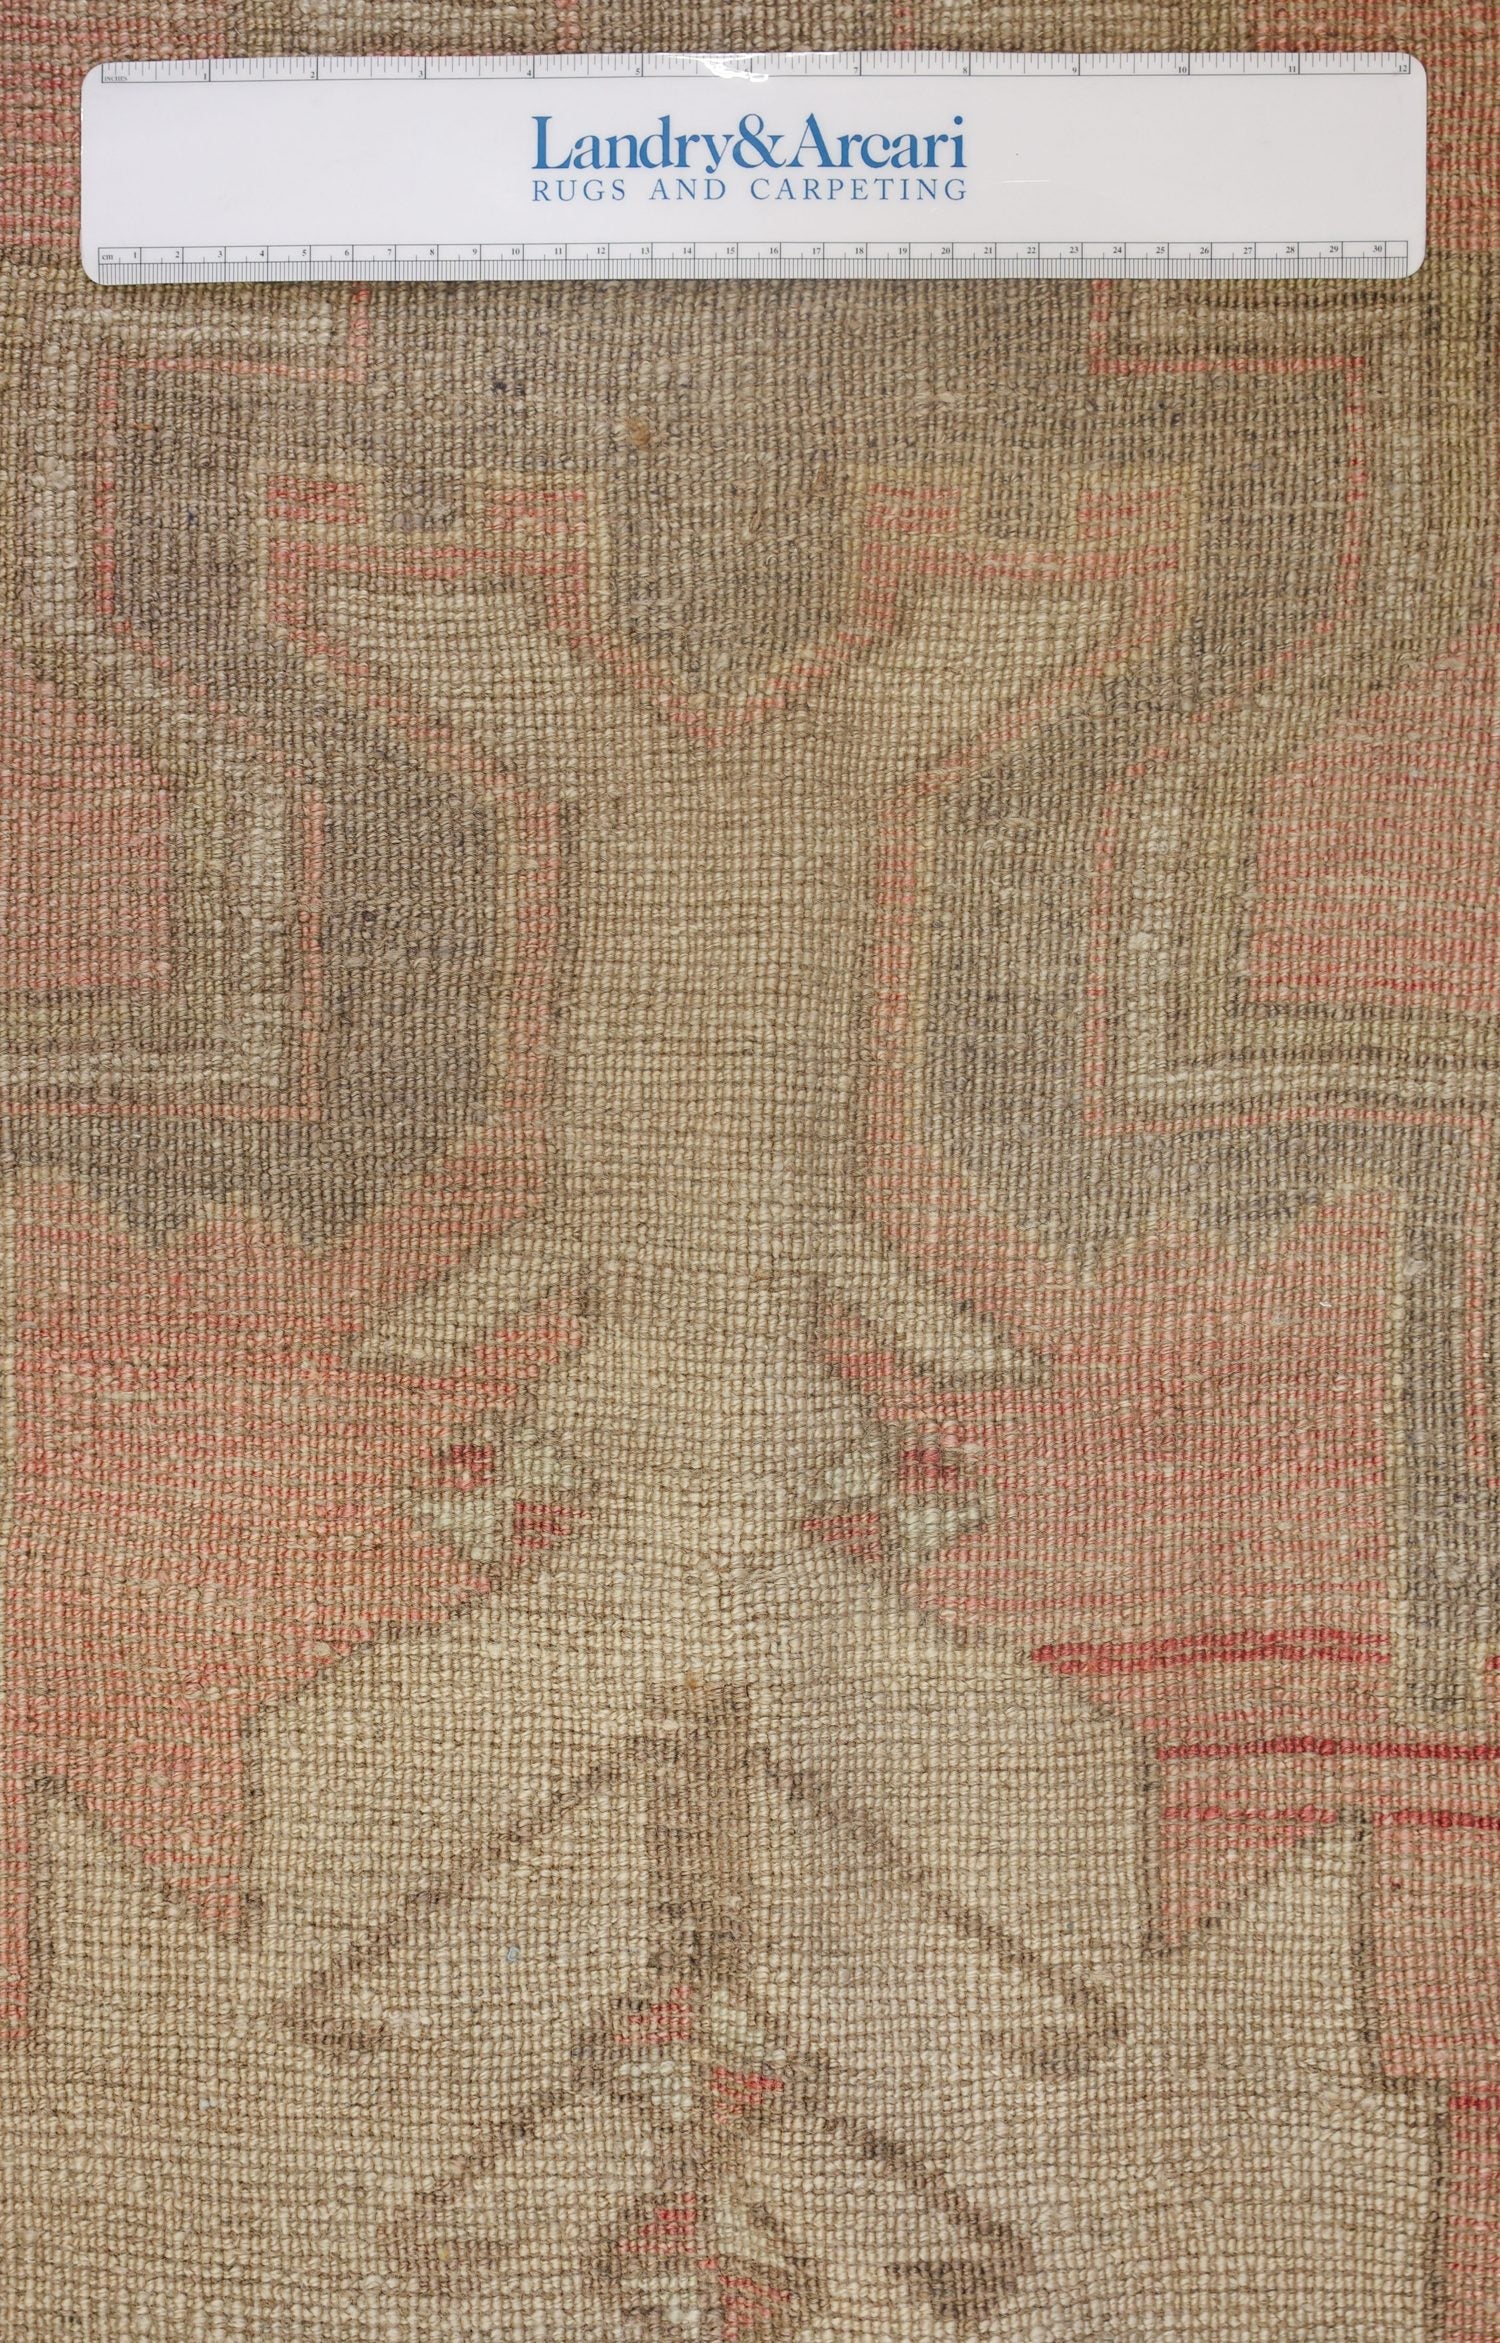 Vintage Konya Handwoven Tribal Rug, J70778